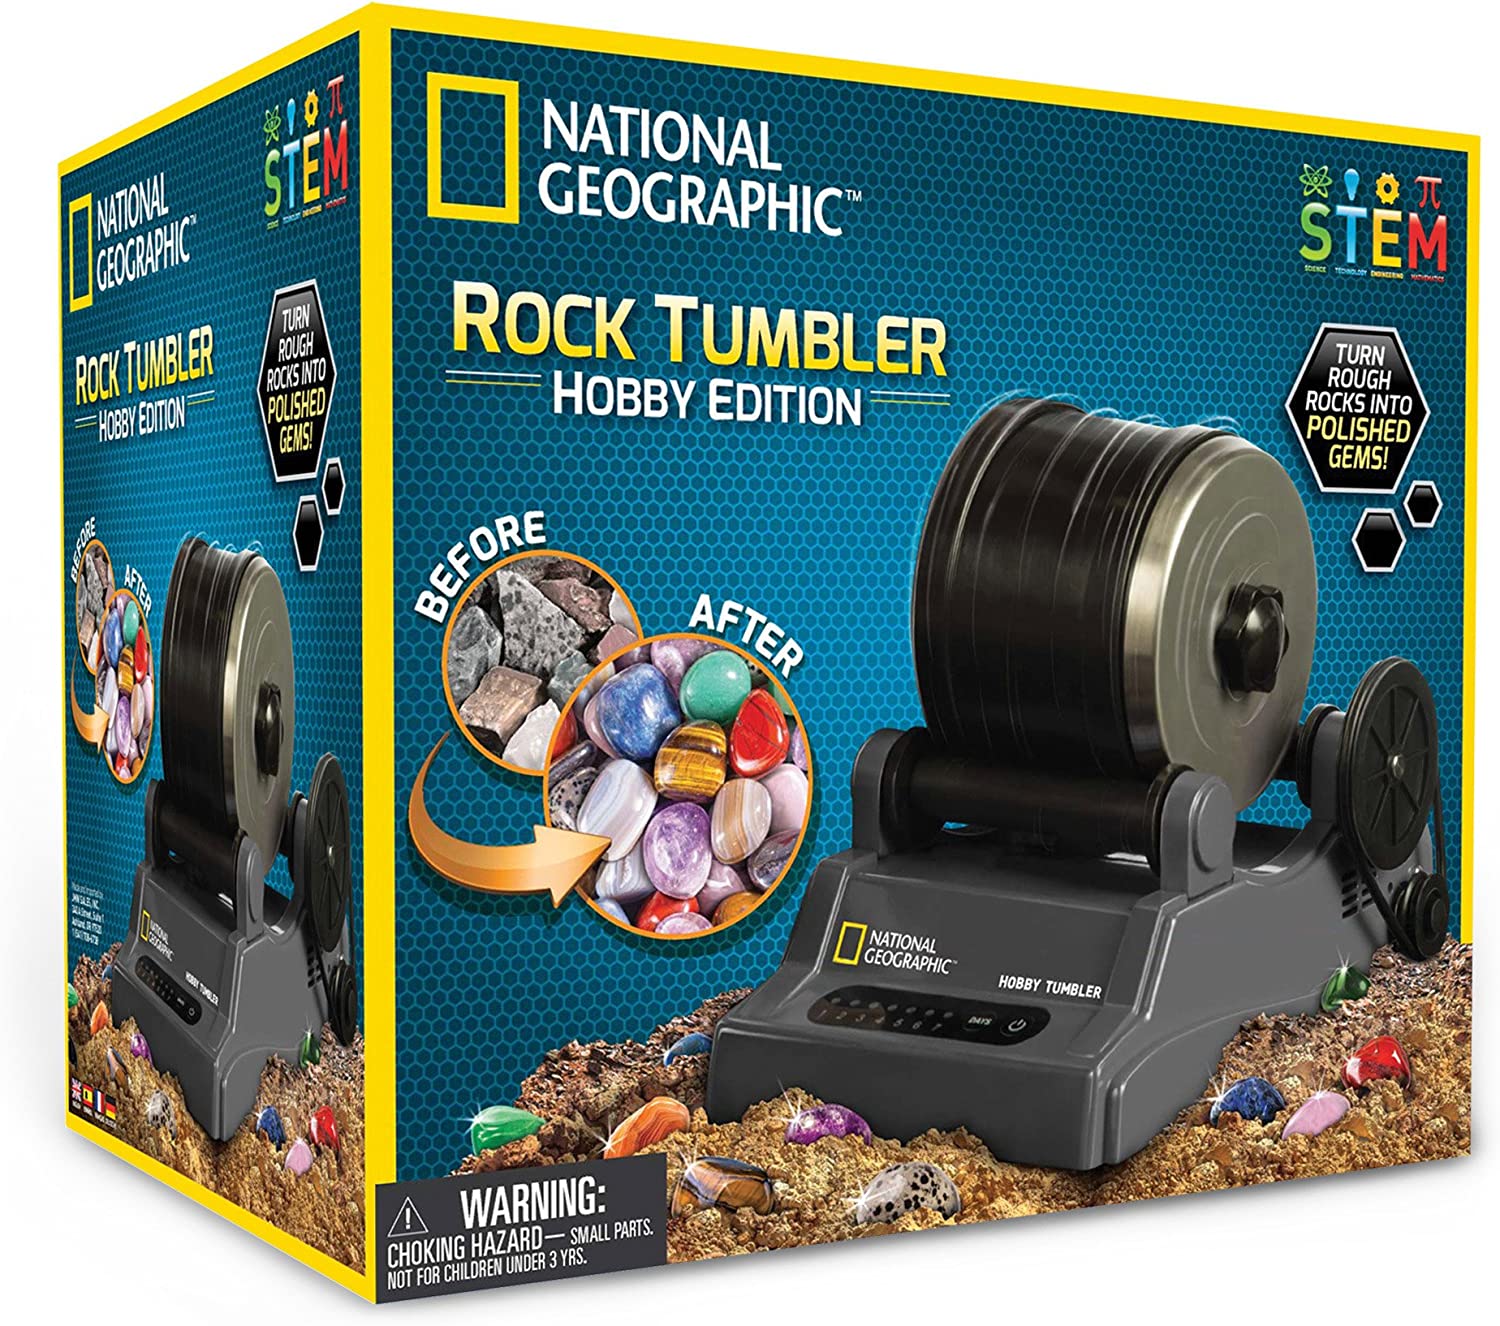 National Geographic Rock Tumbler Kit, 3lb Extra Large Capacity, 3lb Rough Gemstones, 4 Polishing Grits, Jewelry Fastenings, Educational Stem Science